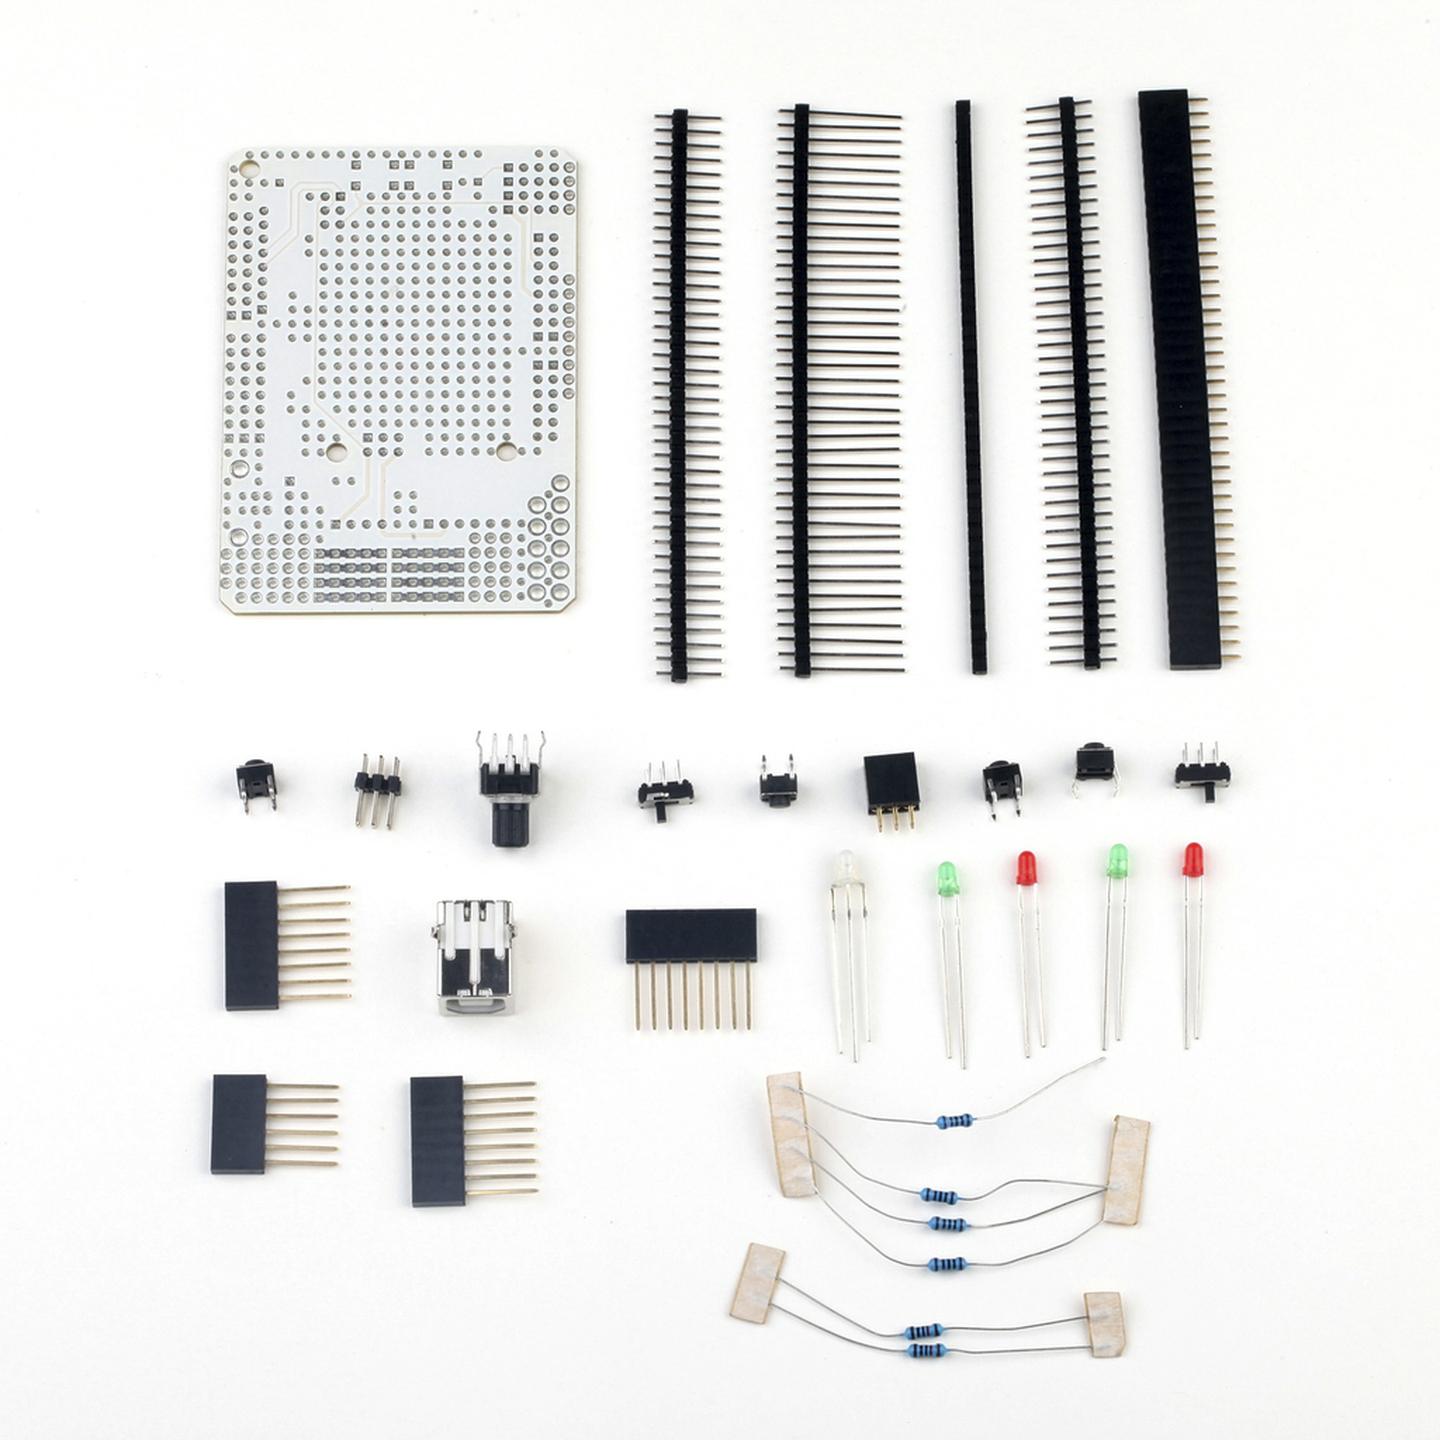 Proto Shield Kit for Arduino